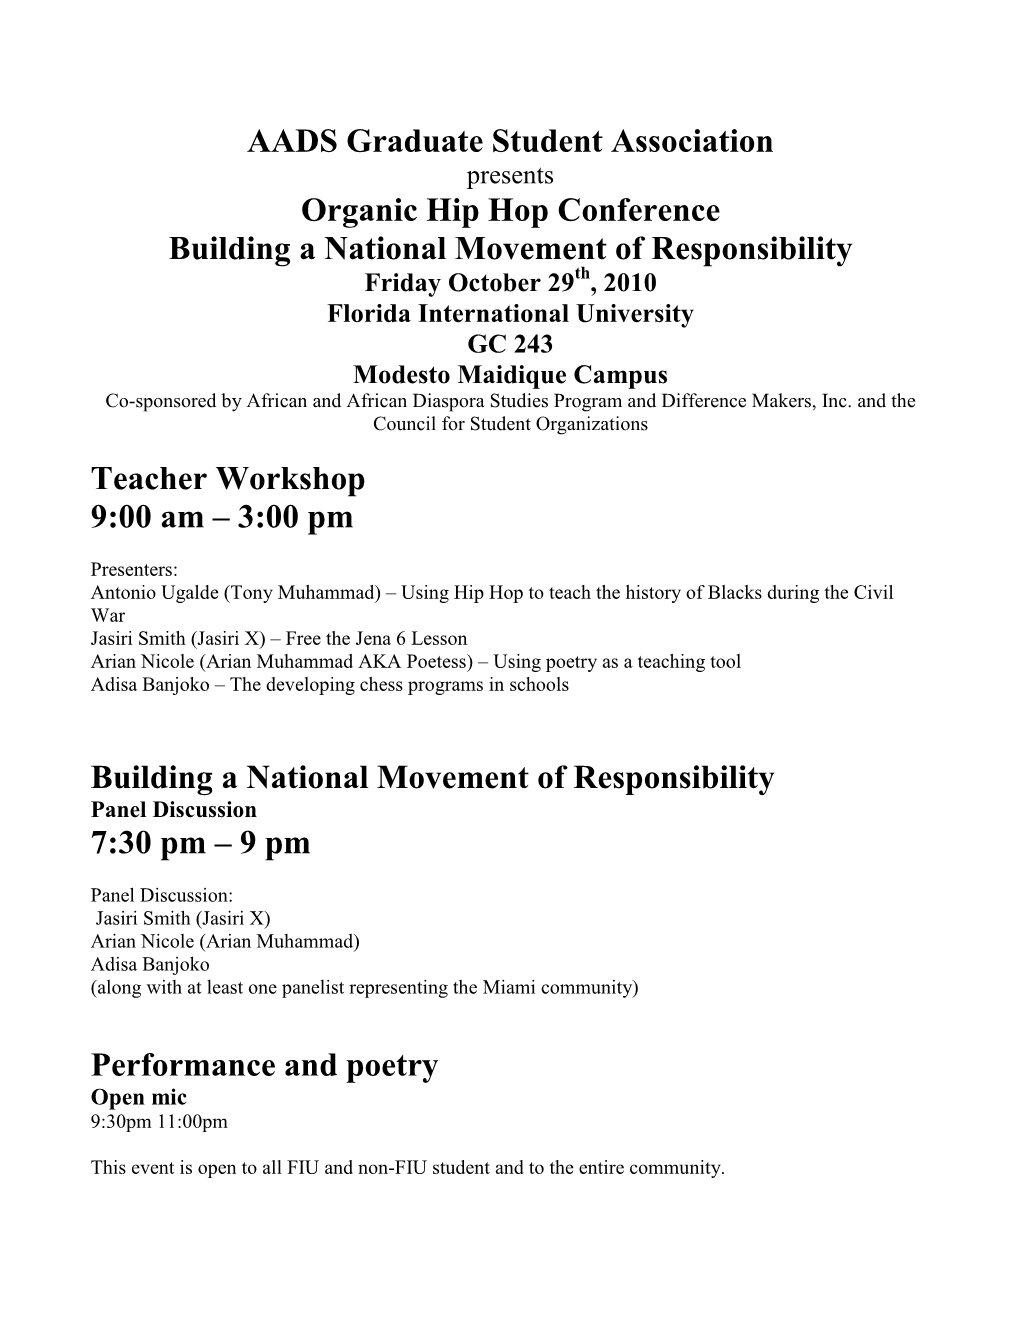 Organic Hip Hop Conference